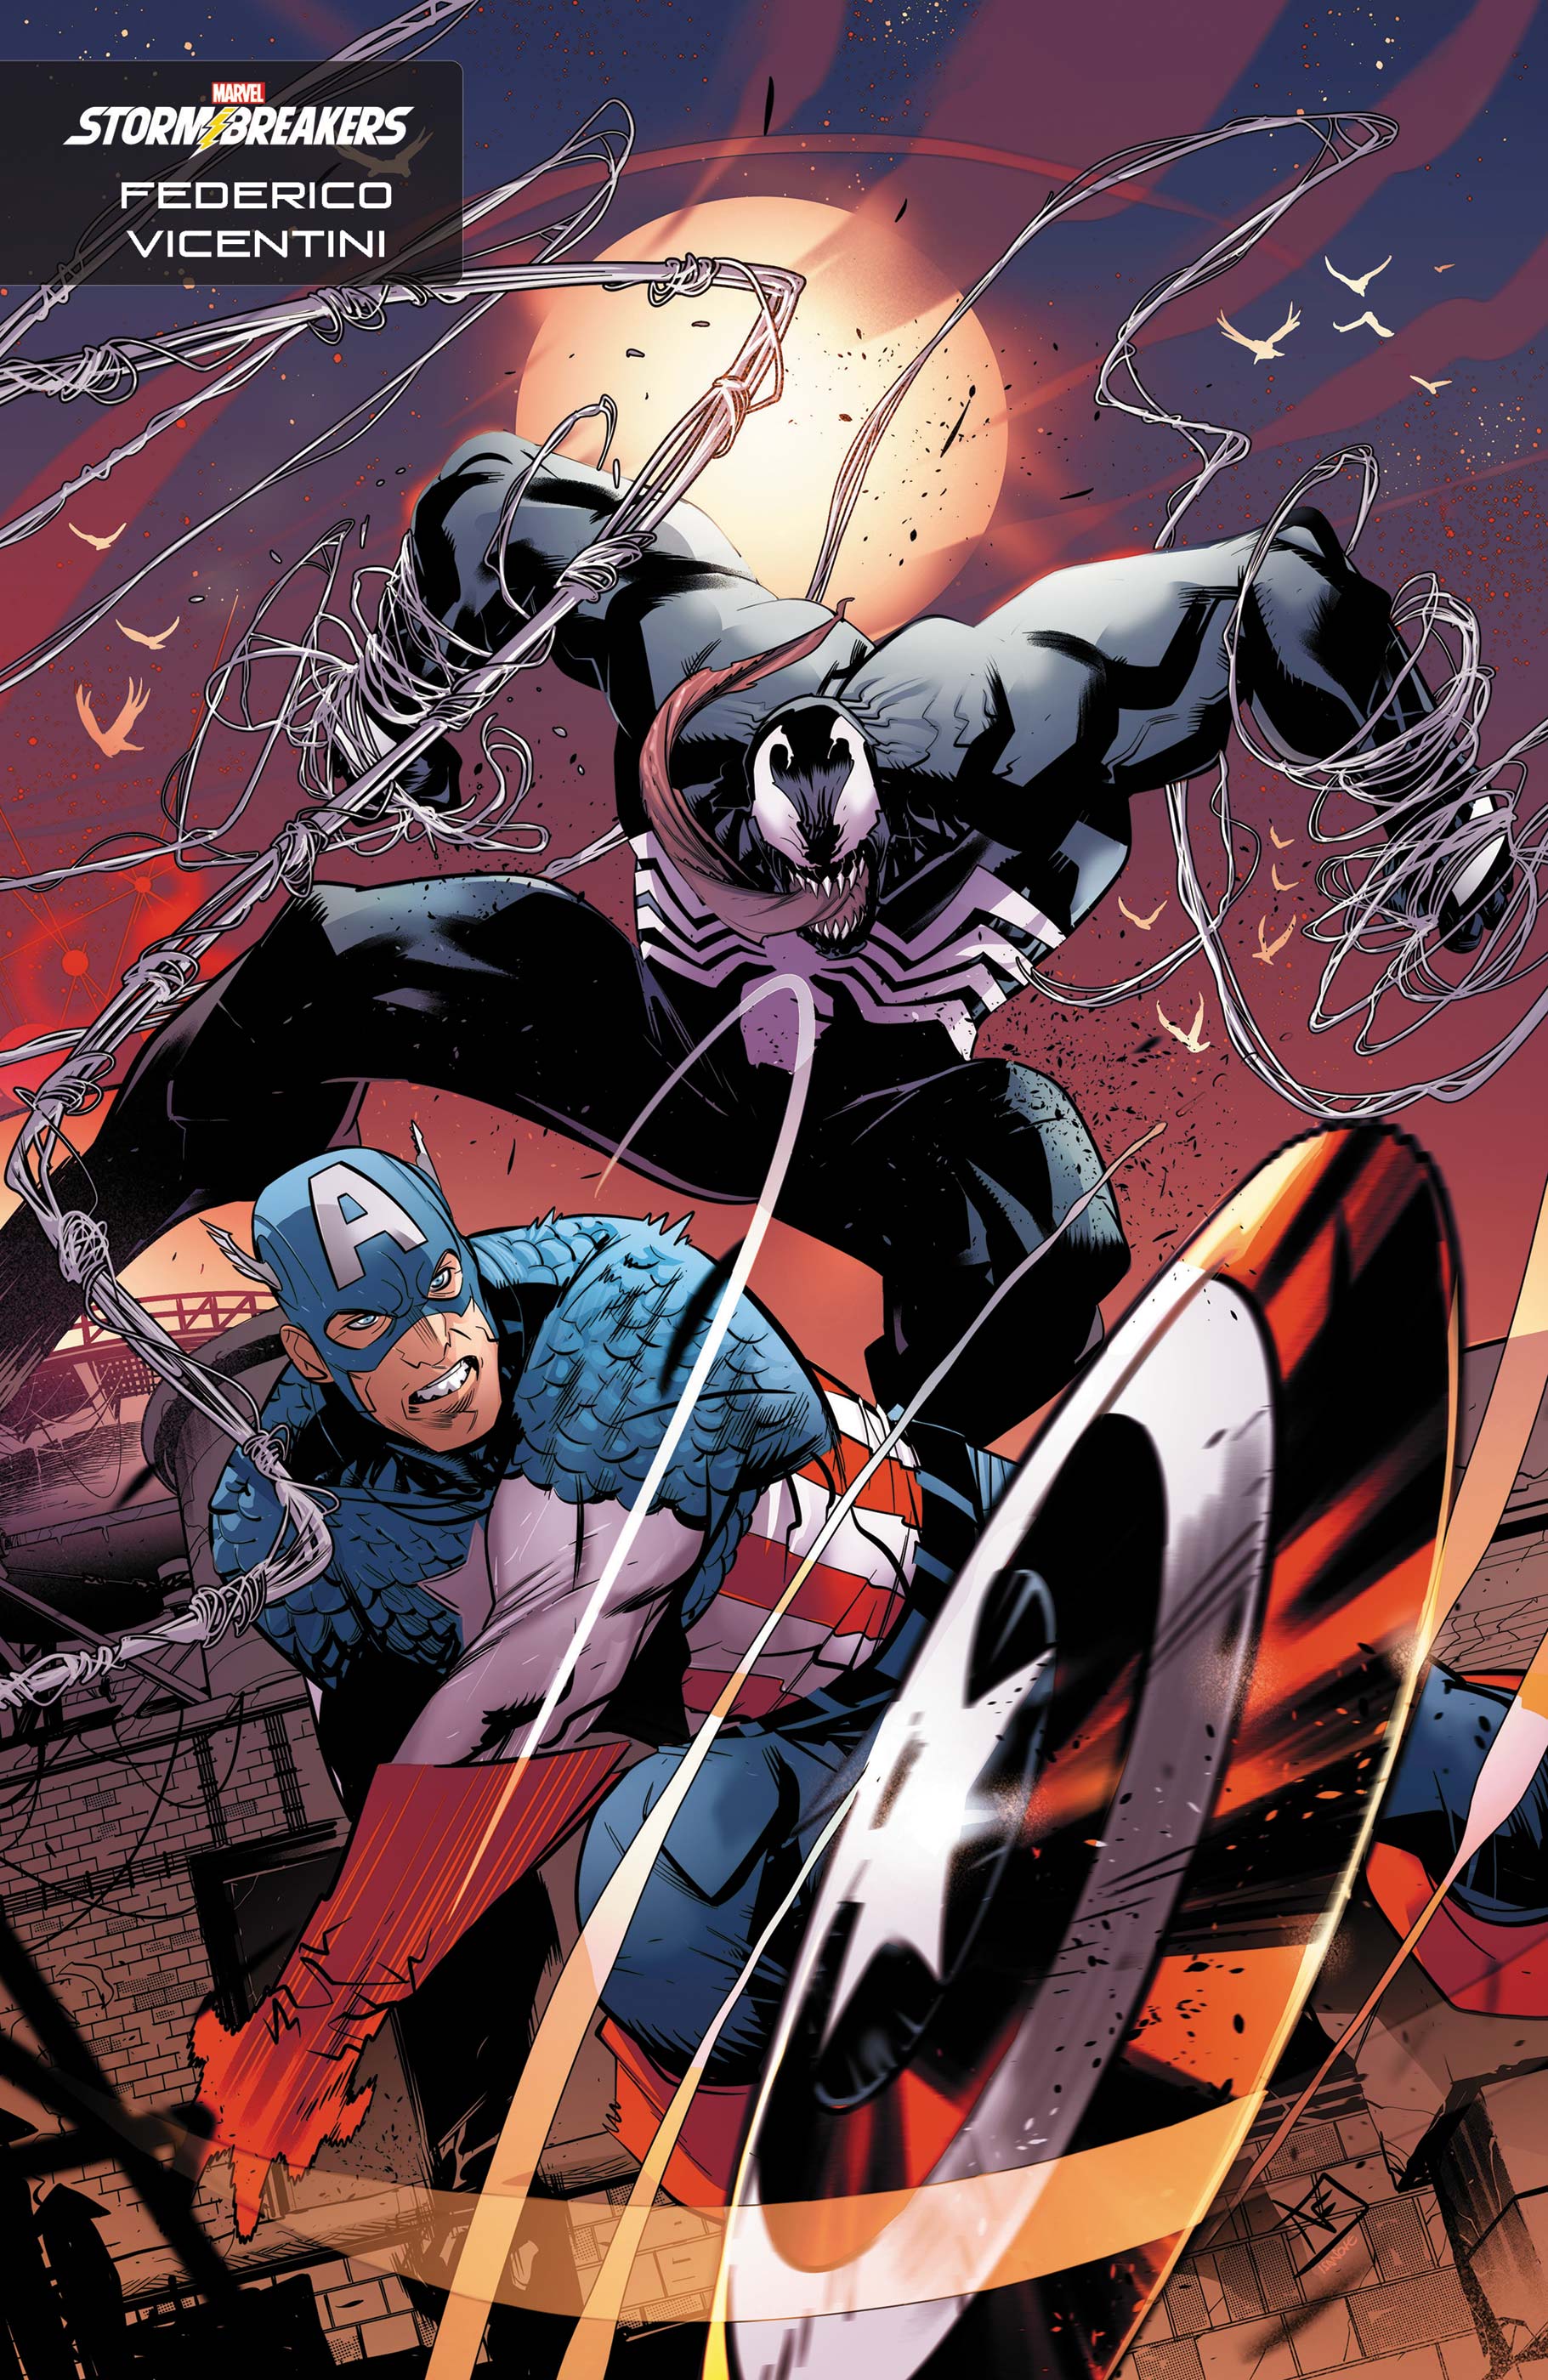 Venom (2021) #25 (Variant)